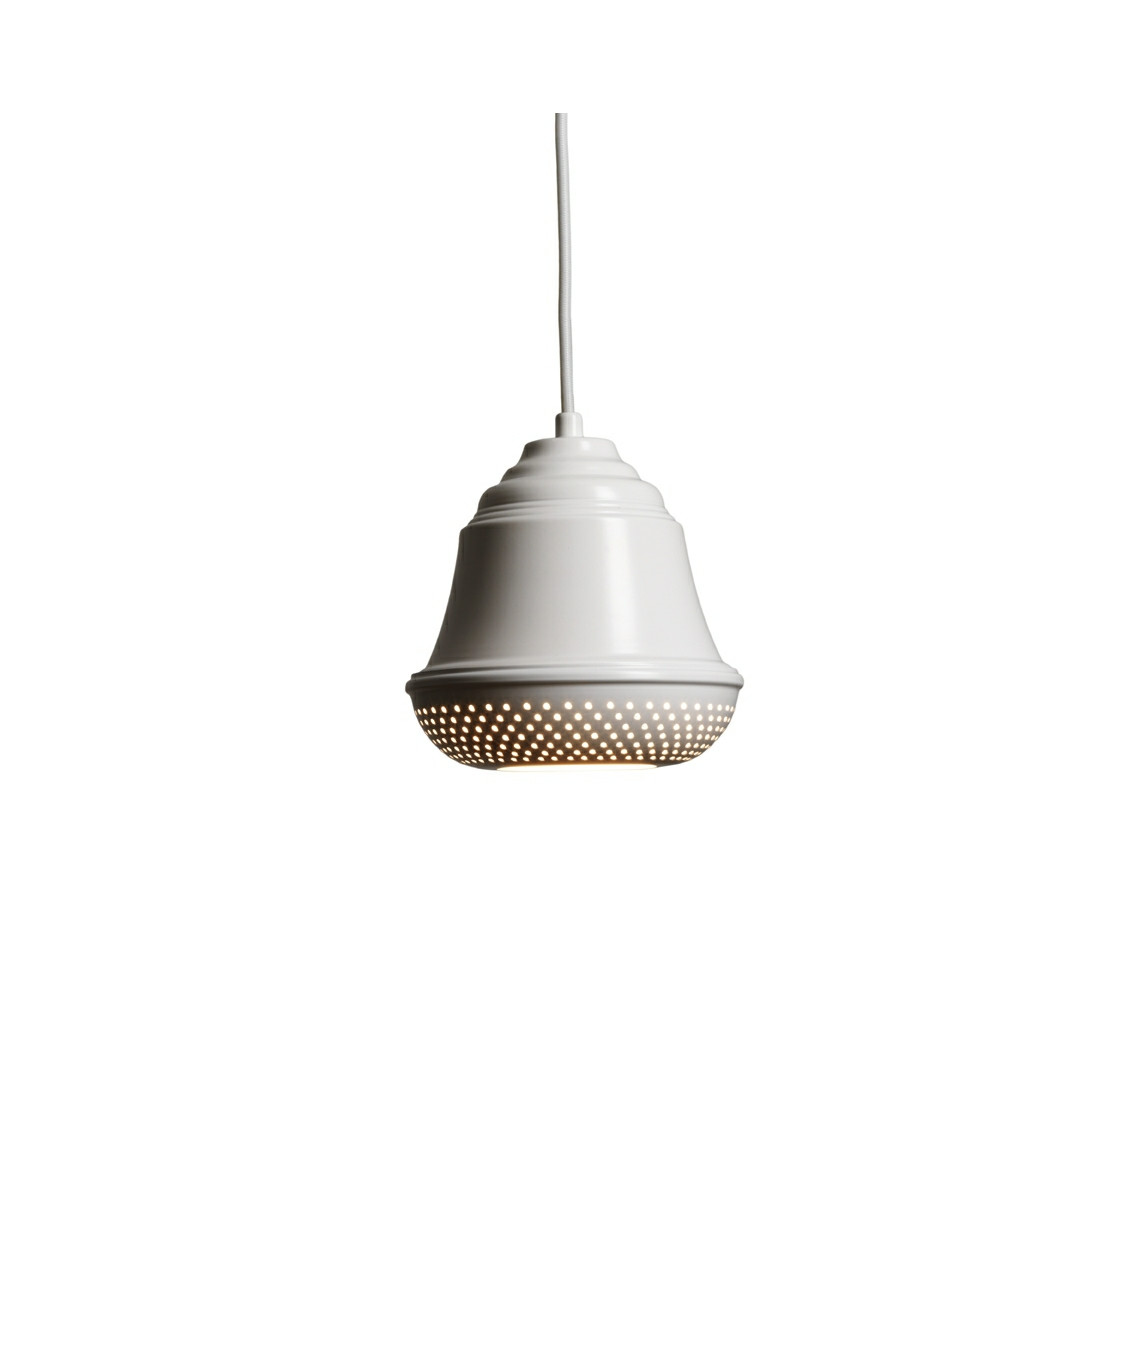 Design By Us - Bellis 160 Hanglamp Wit